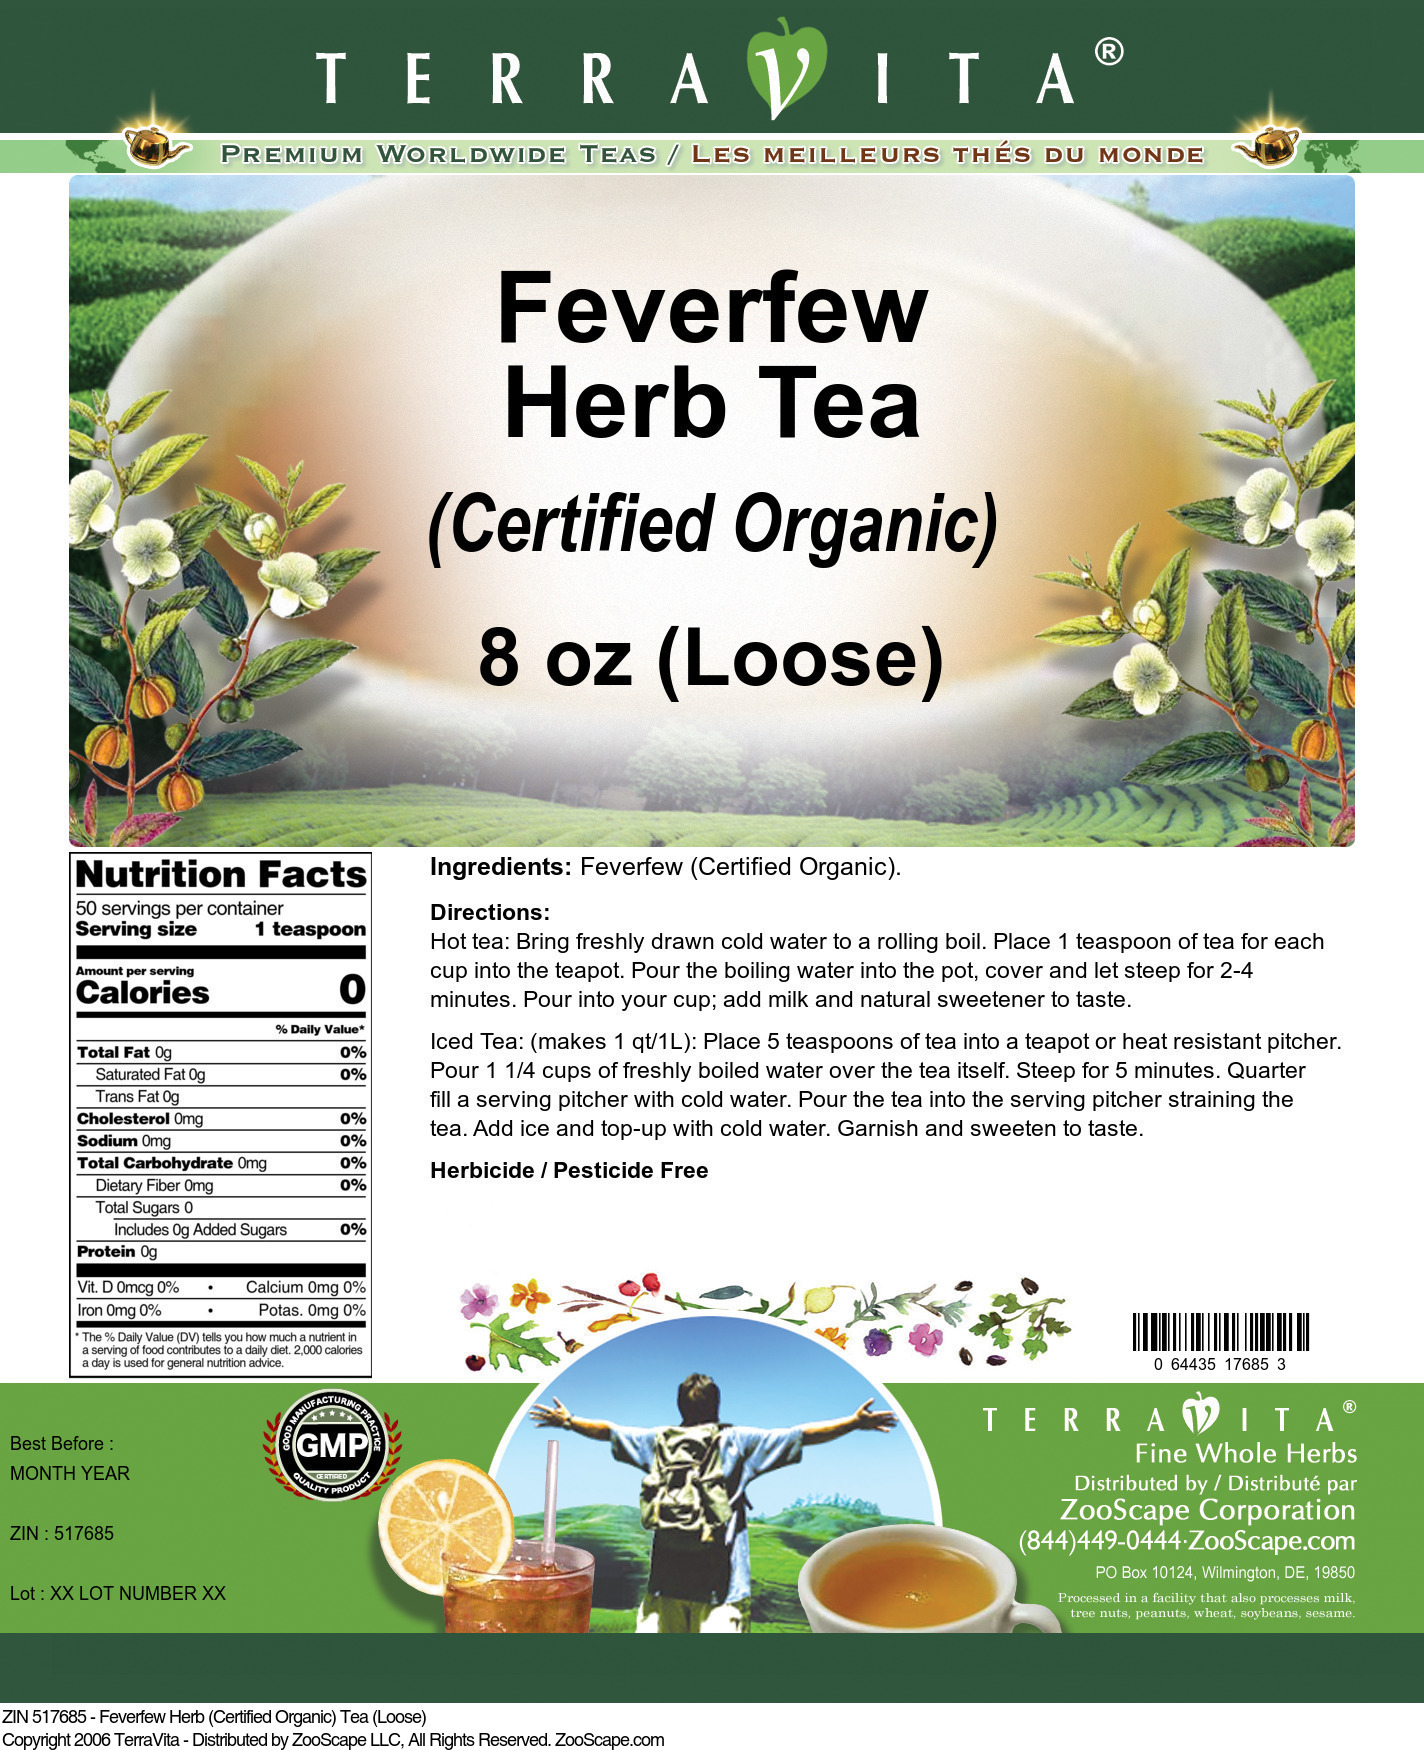 Feverfew Herb (Certified Organic) Tea (Loose) - Label